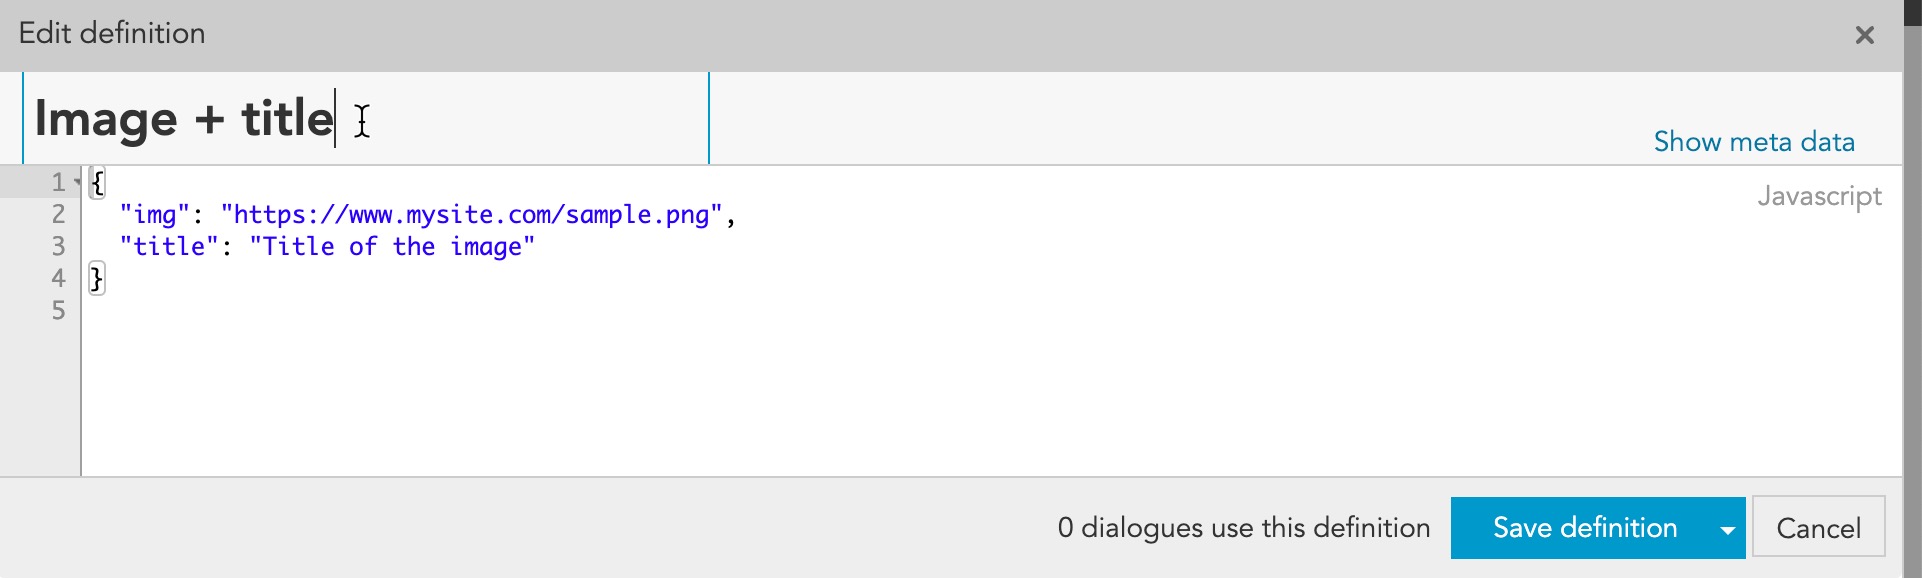 PB_dialogue_edit_definition_2.jpg